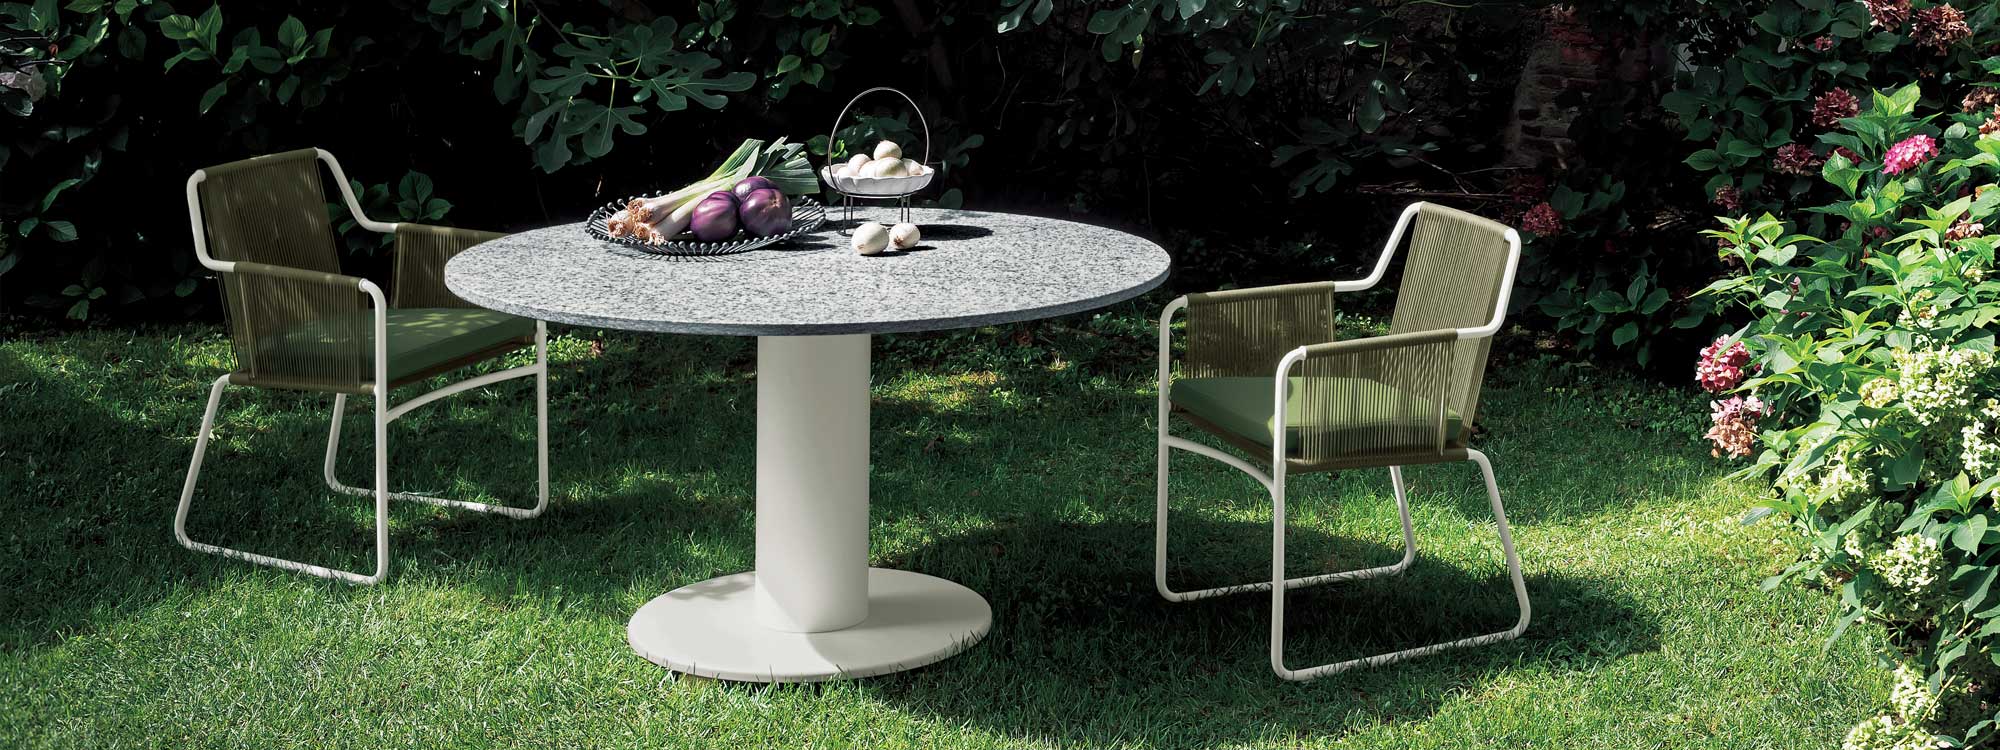 Platter circular garden table is a round outdoor dining table in high quality garden furniture materials by Roda modern garden furniture.